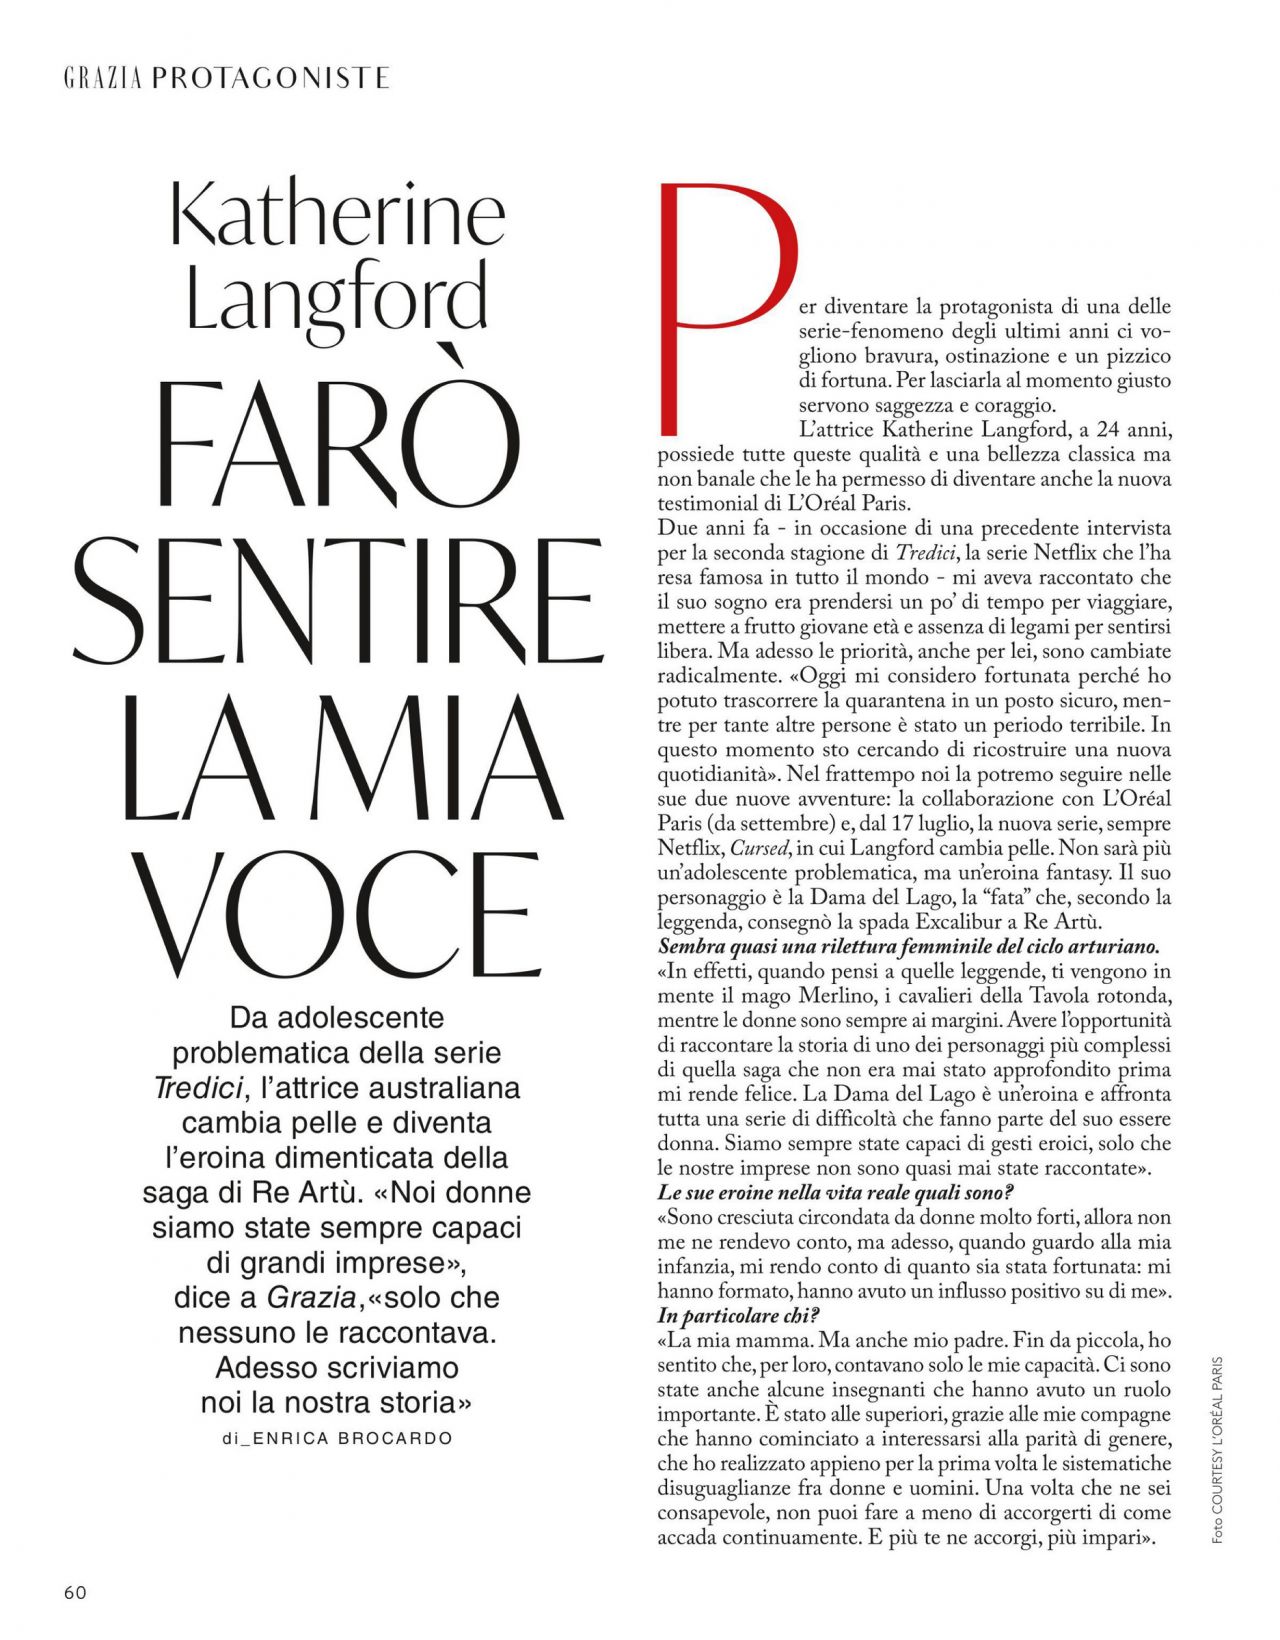 katherine-langford-grazia-italy-07-09-2020-issue-1.jpg